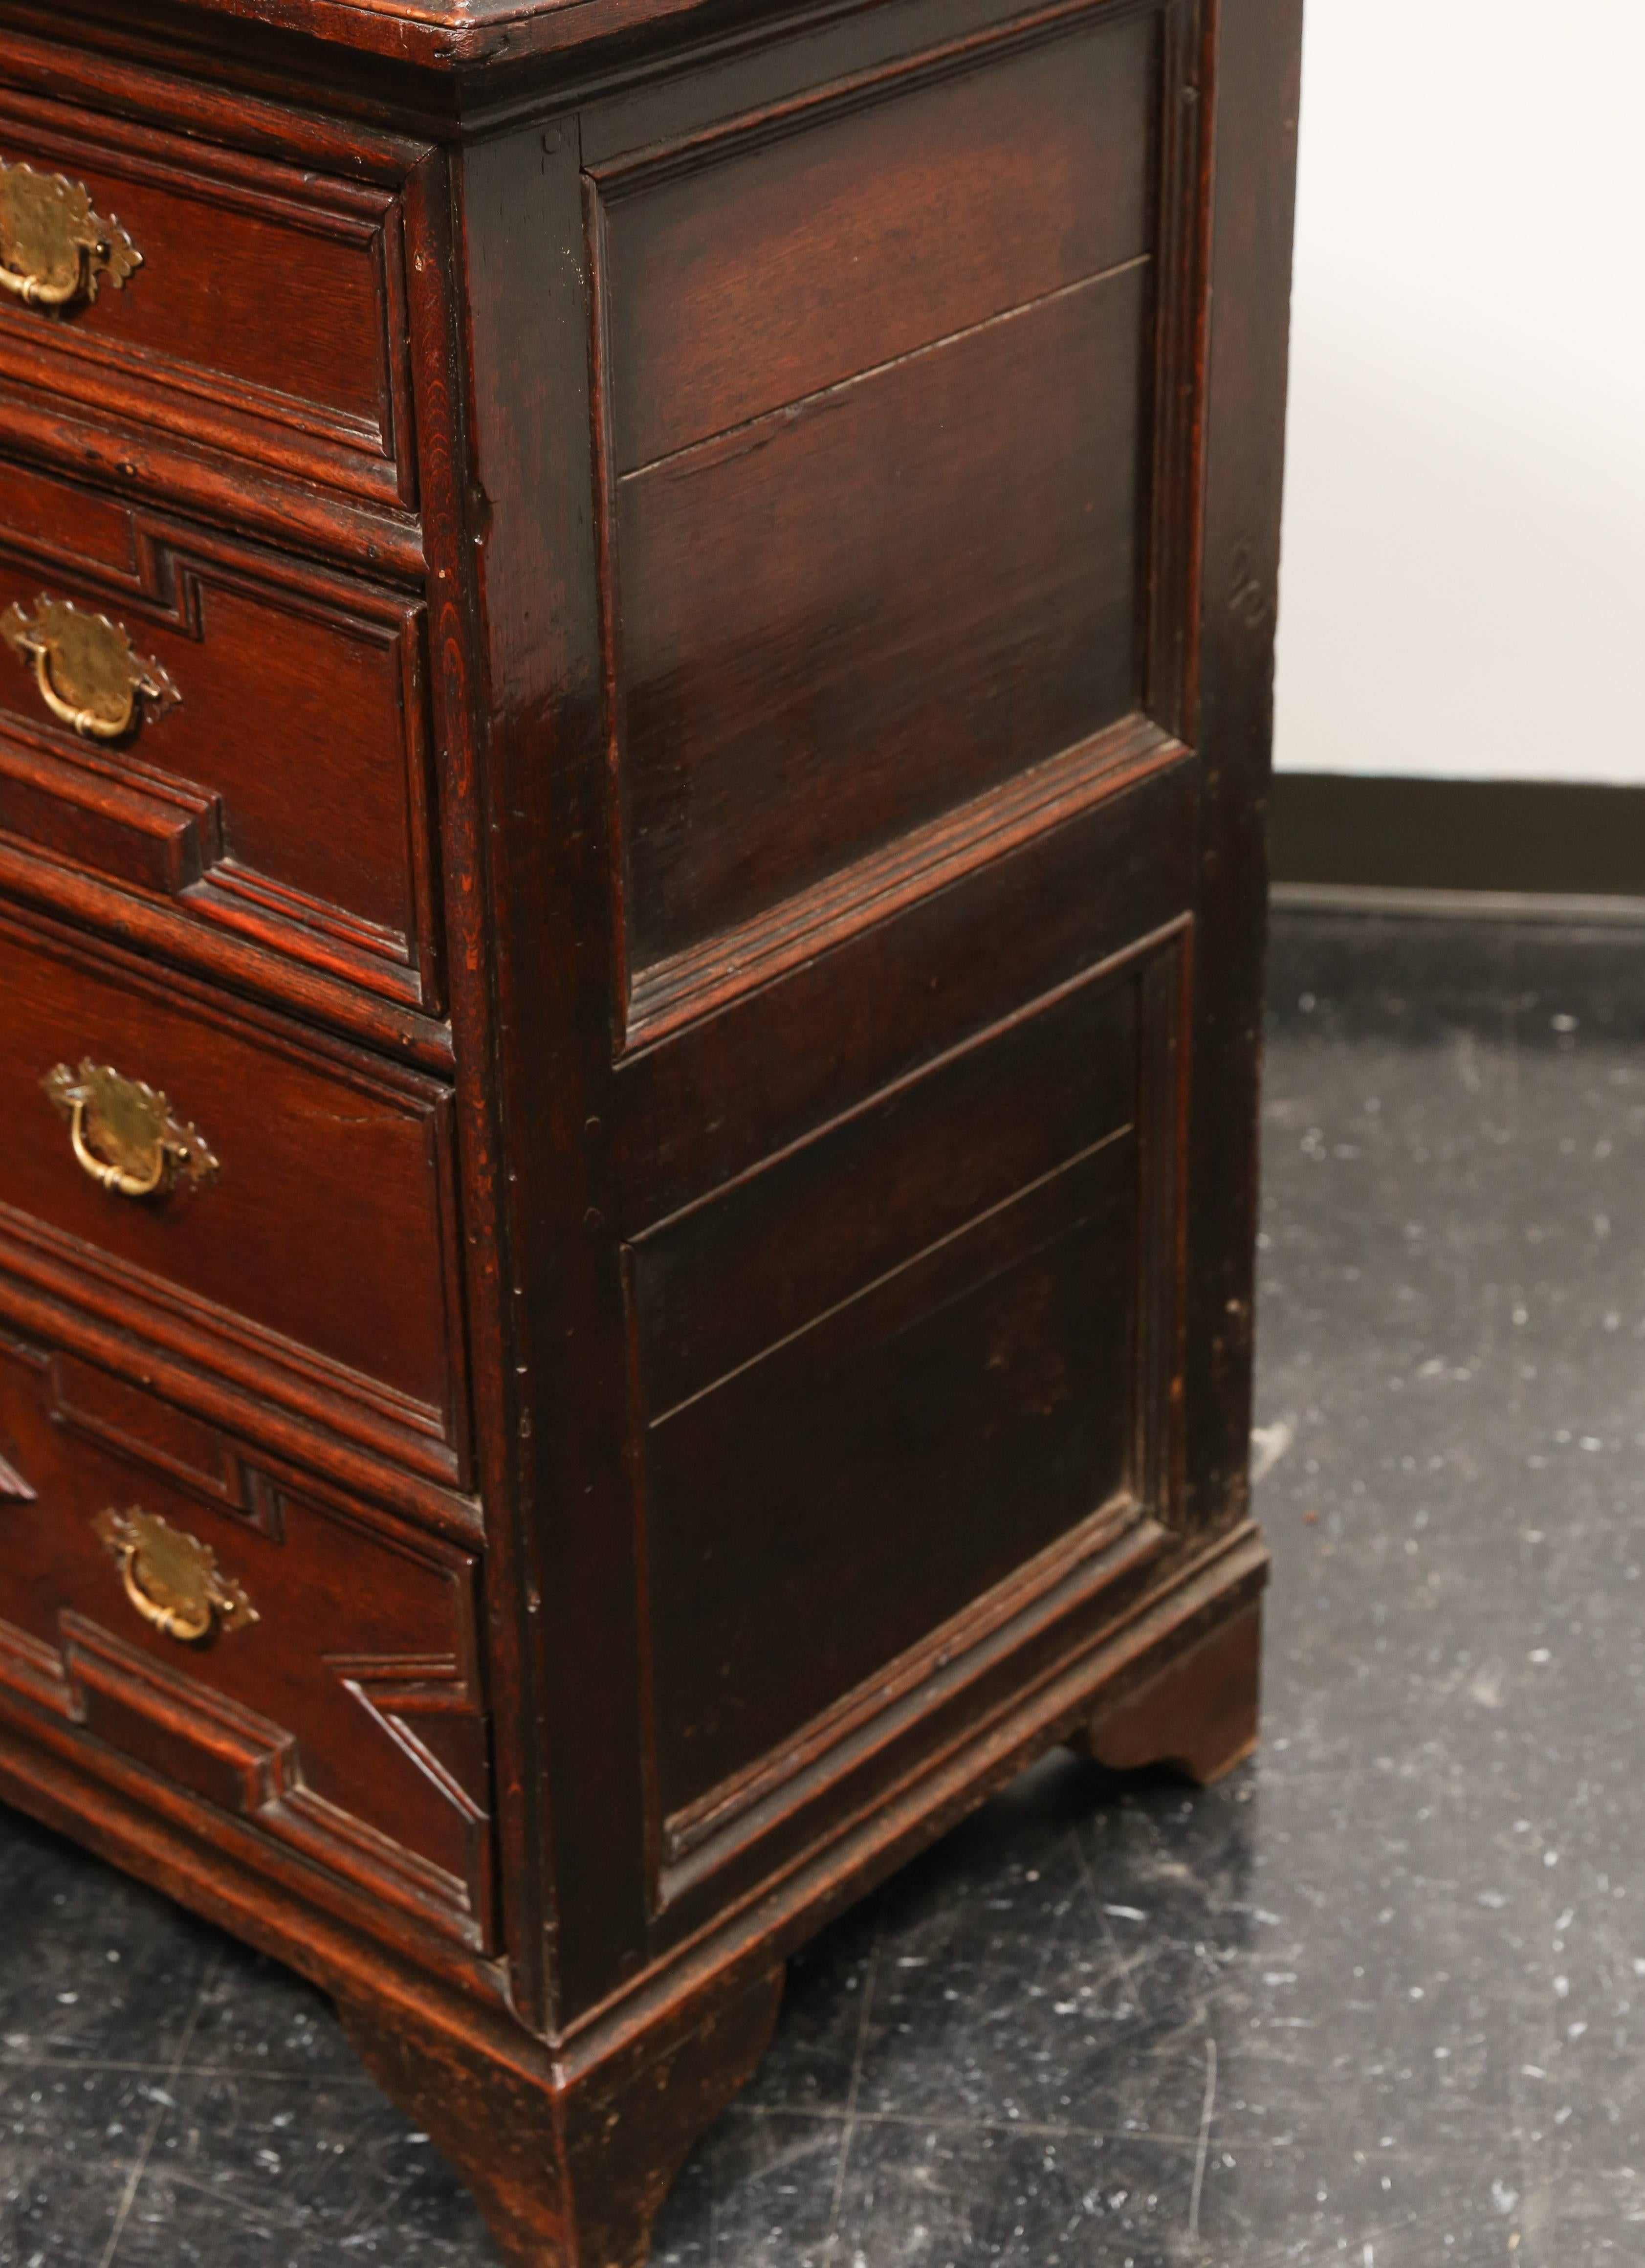 18th century drawers